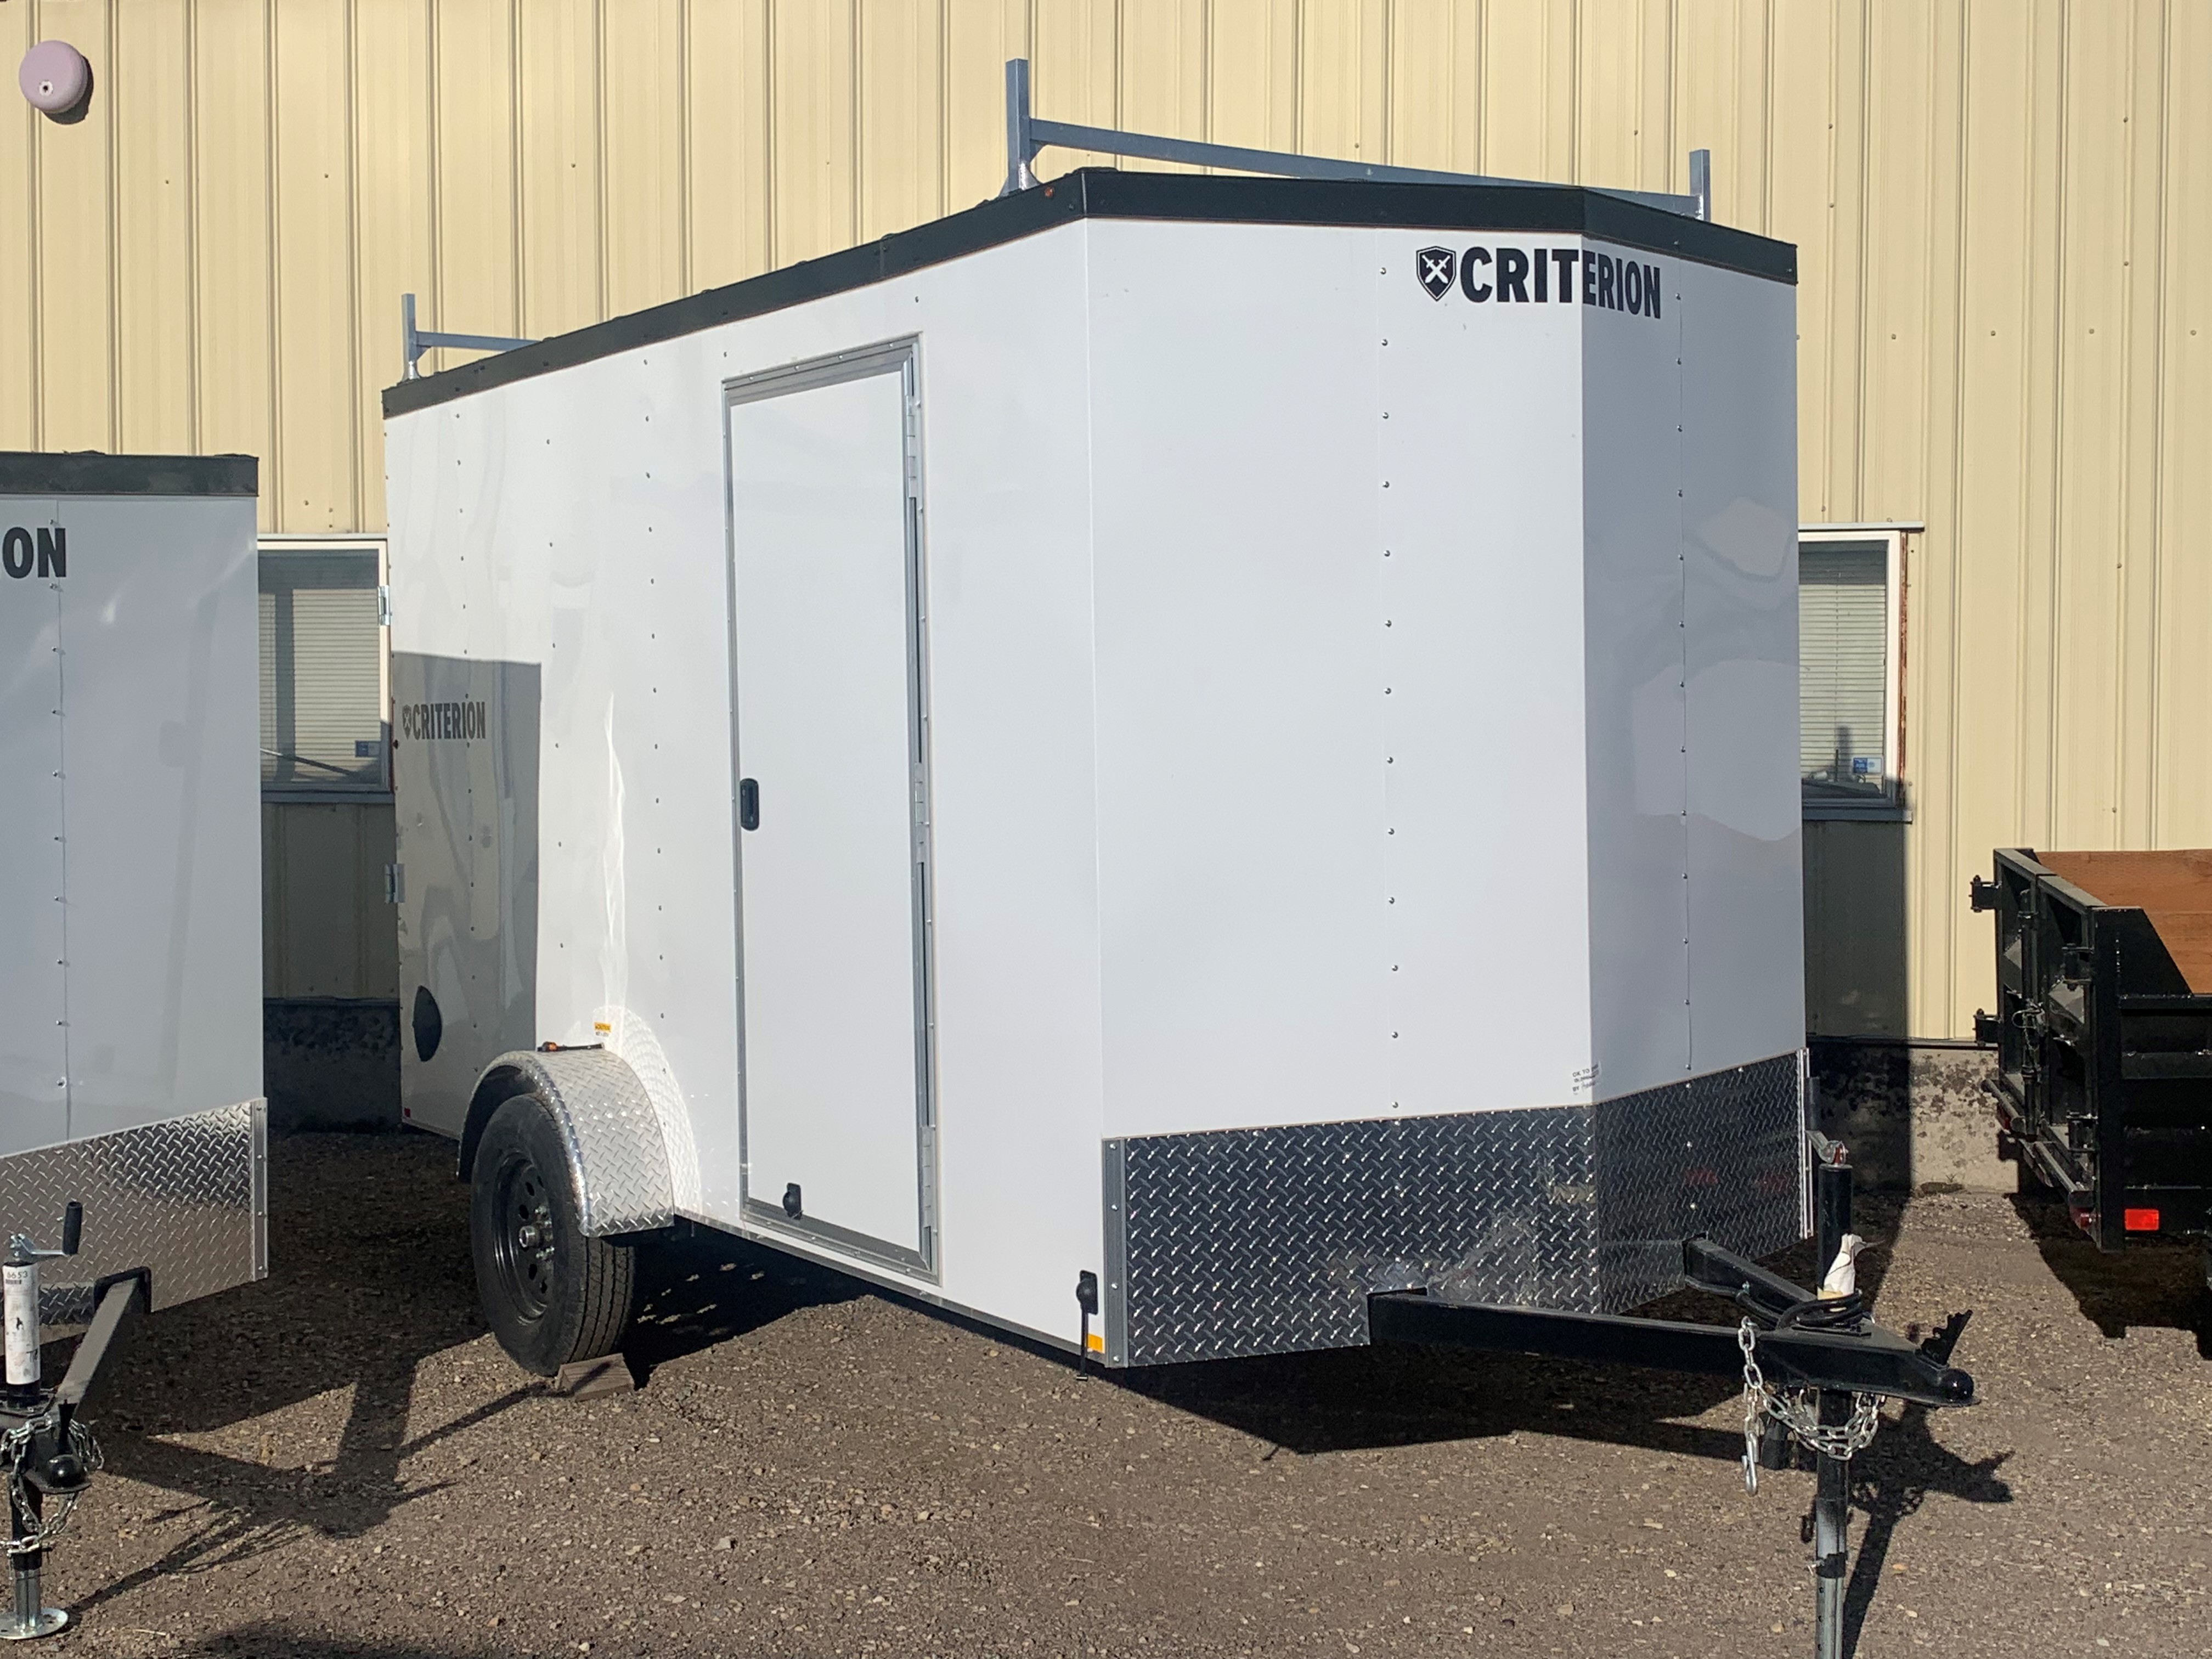 6' x 12' Criterion enclosed cargo utility trailer with ramp door.